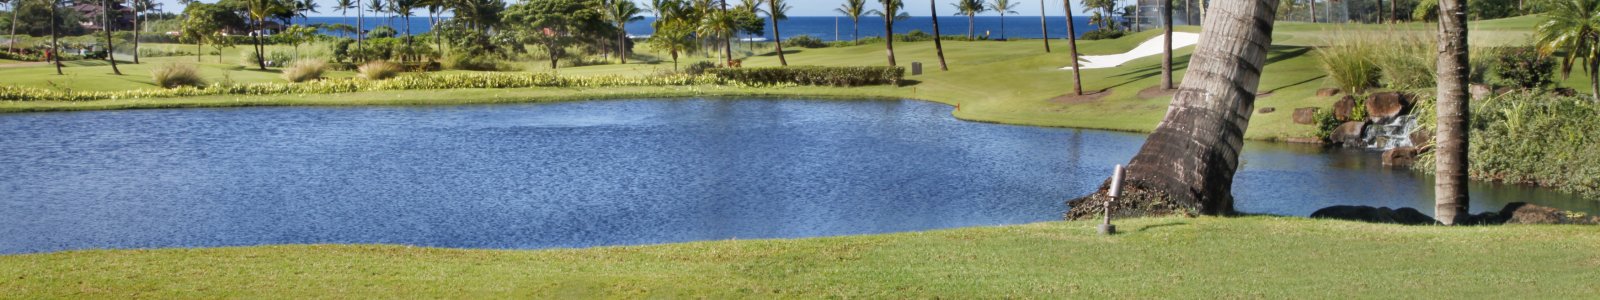 7 Best Things To Do In Kauai